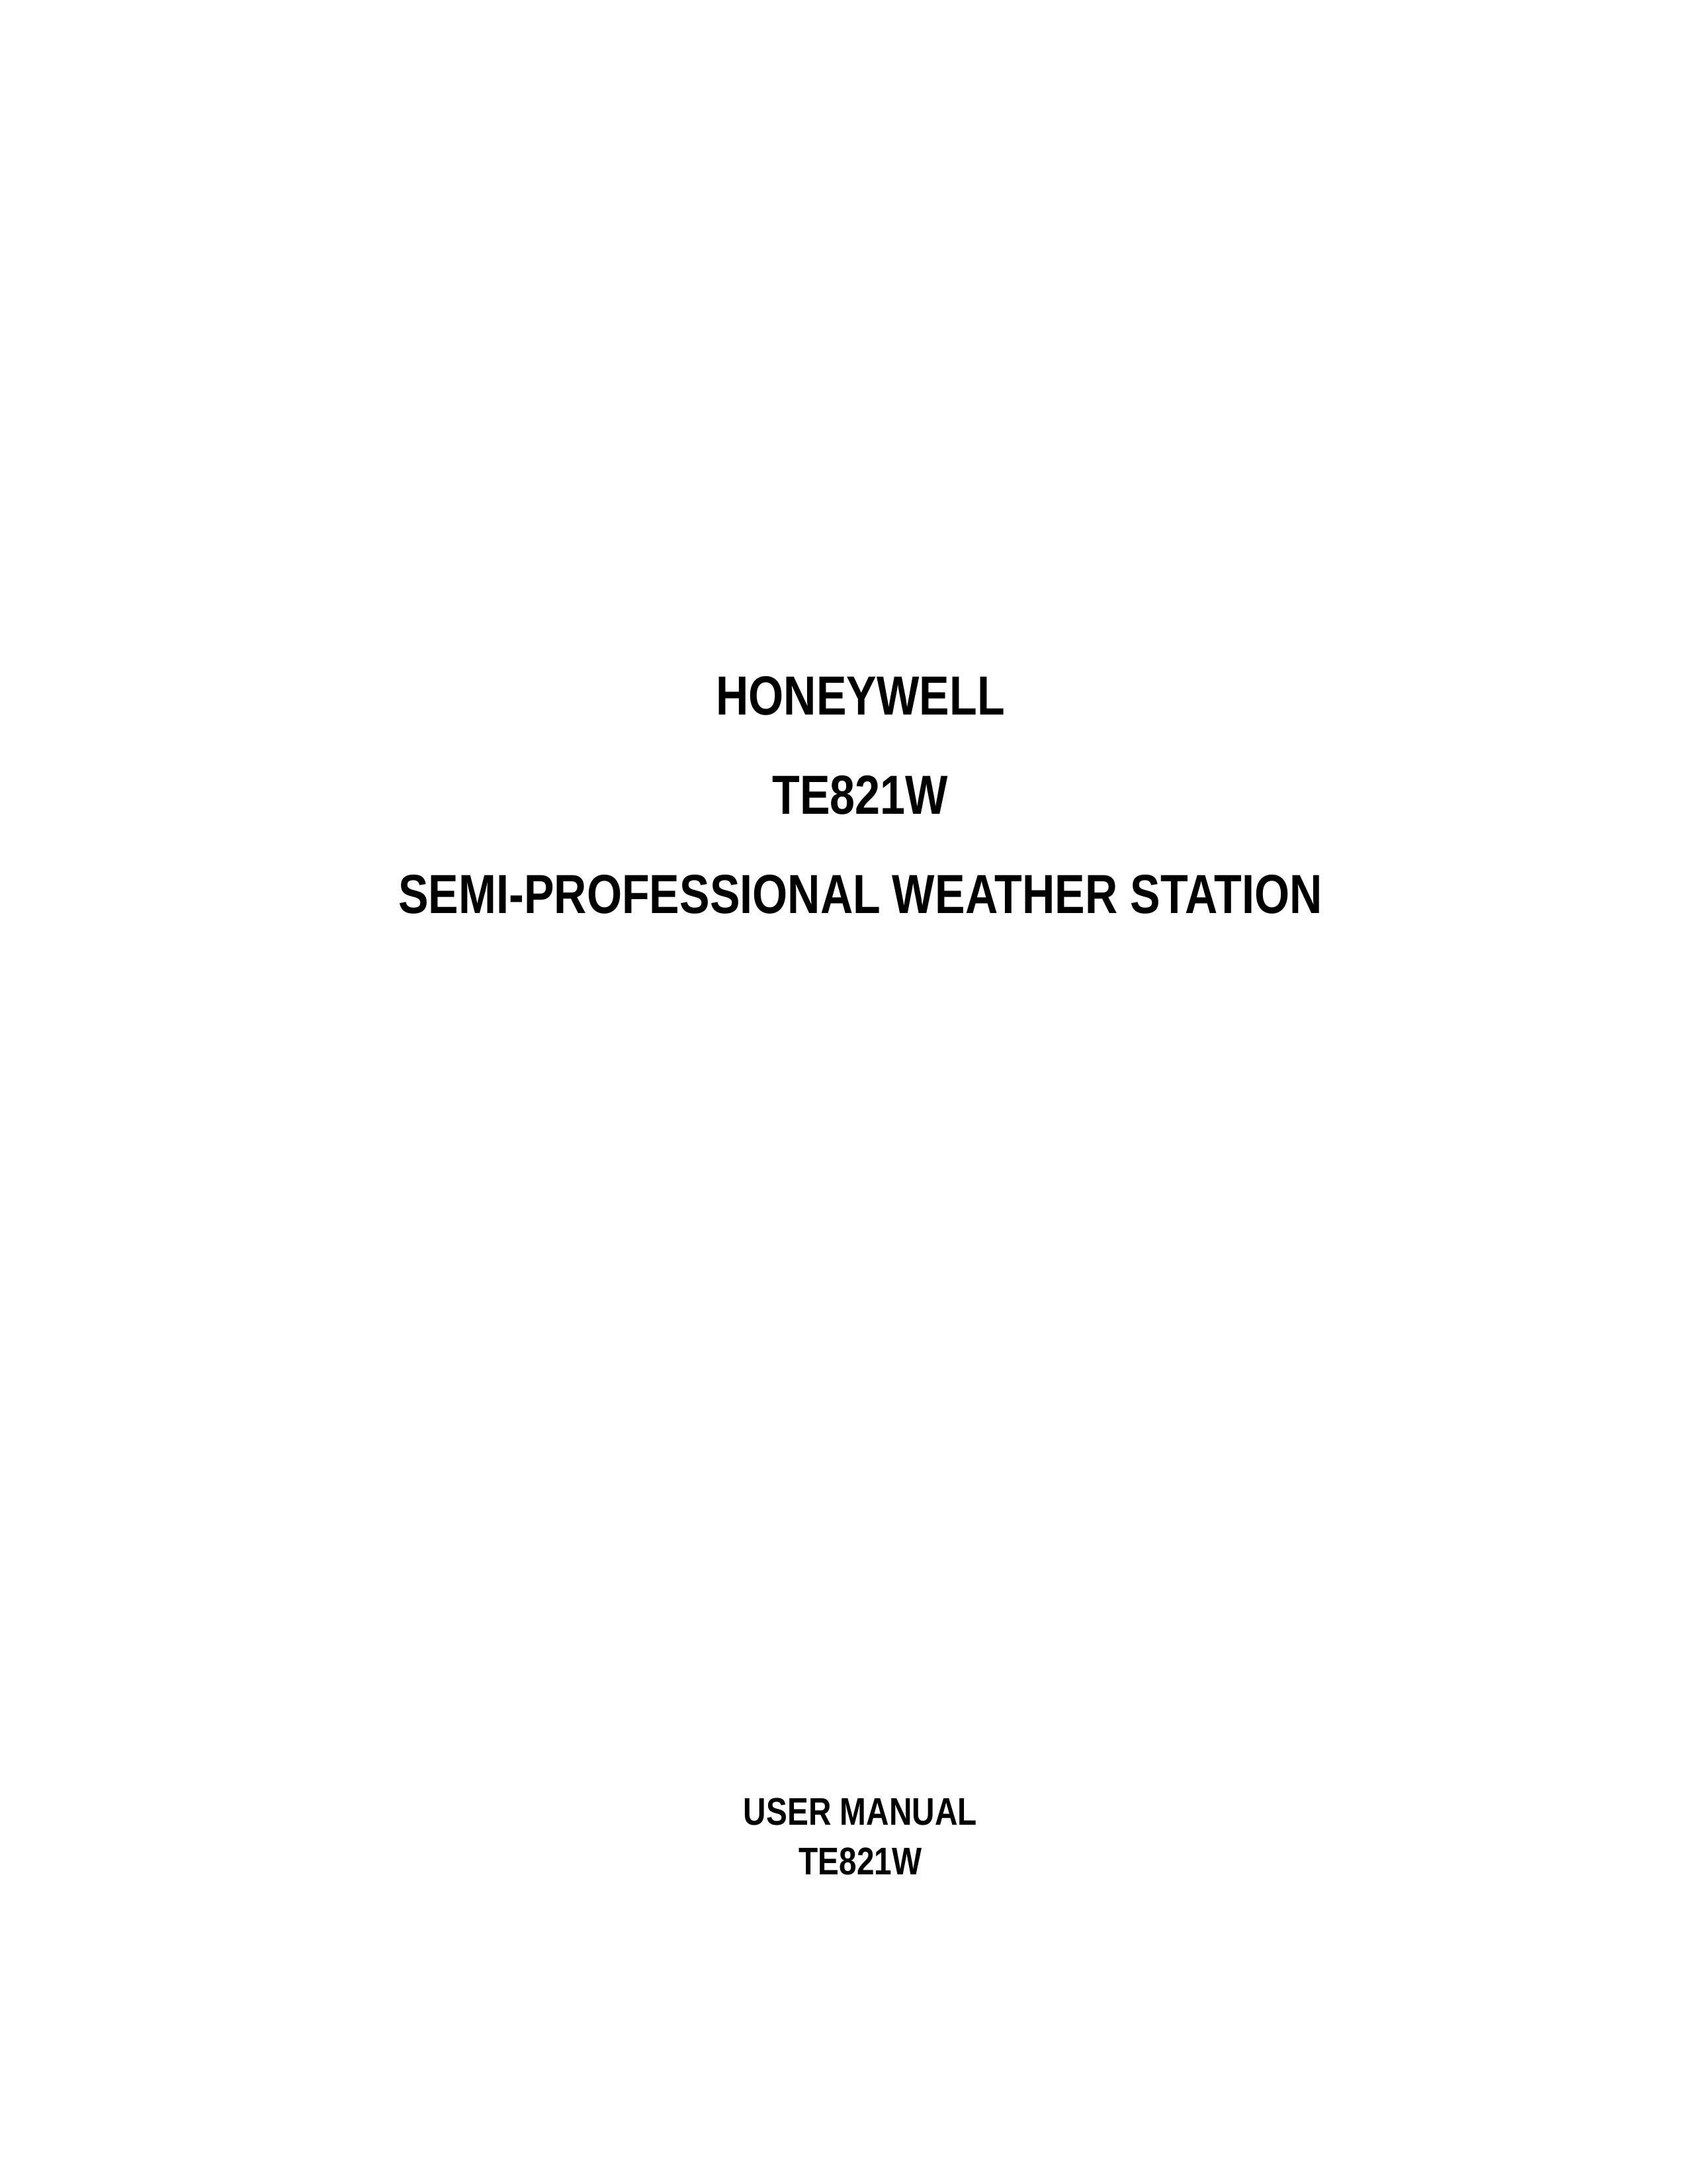 Honeywell TE821W Marine Radio User Manual